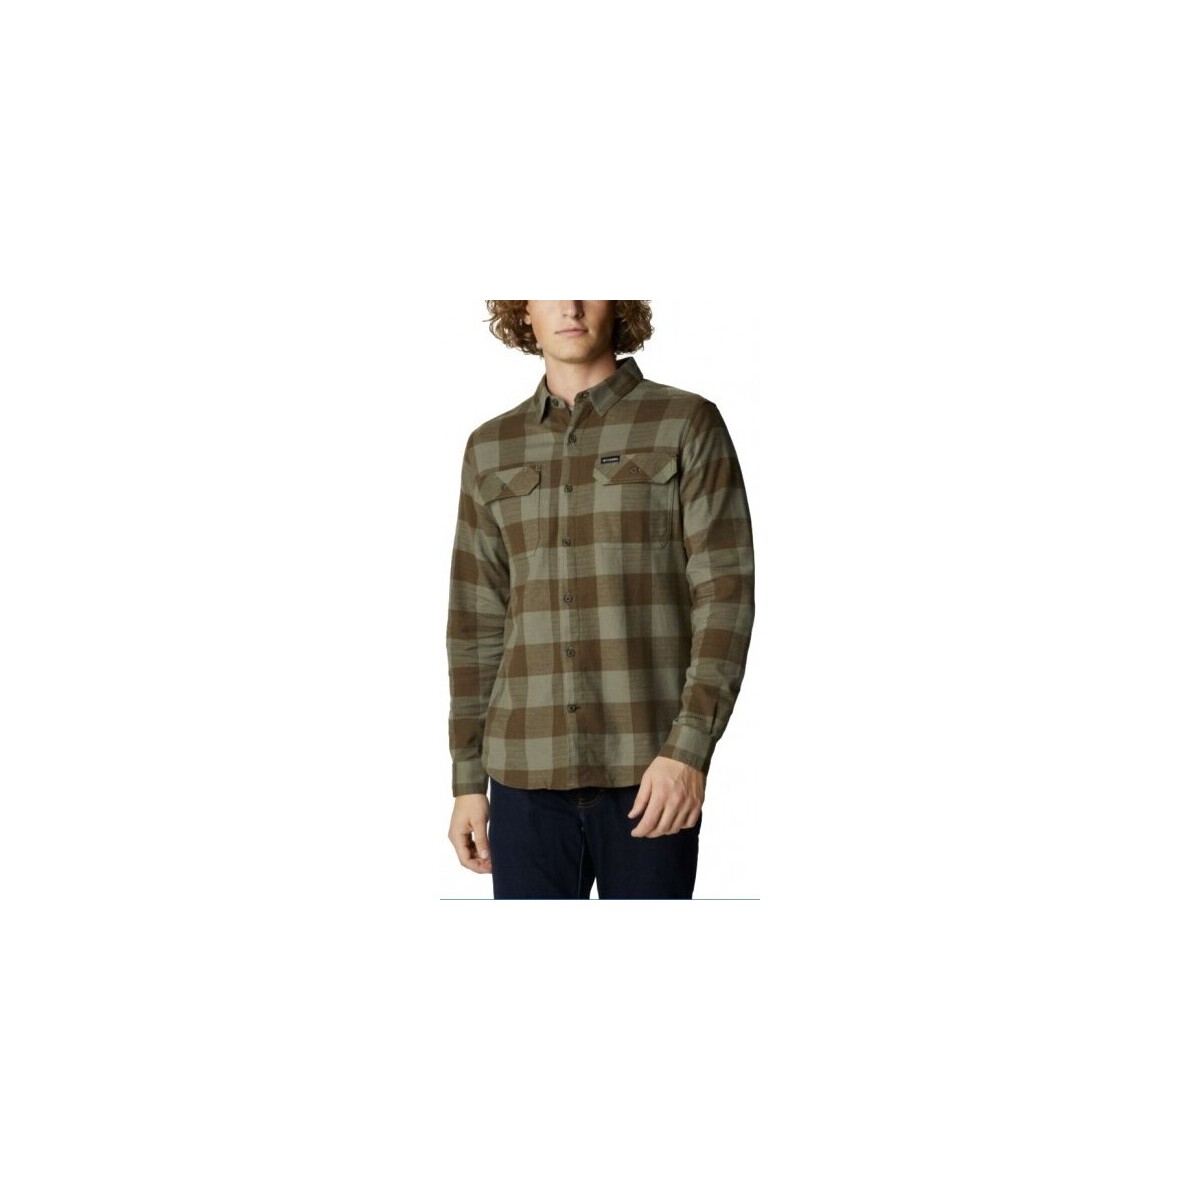 Vêtements Homme Chemises manches longues Columbia - Flare gun stretch flannel mountain homme Vert